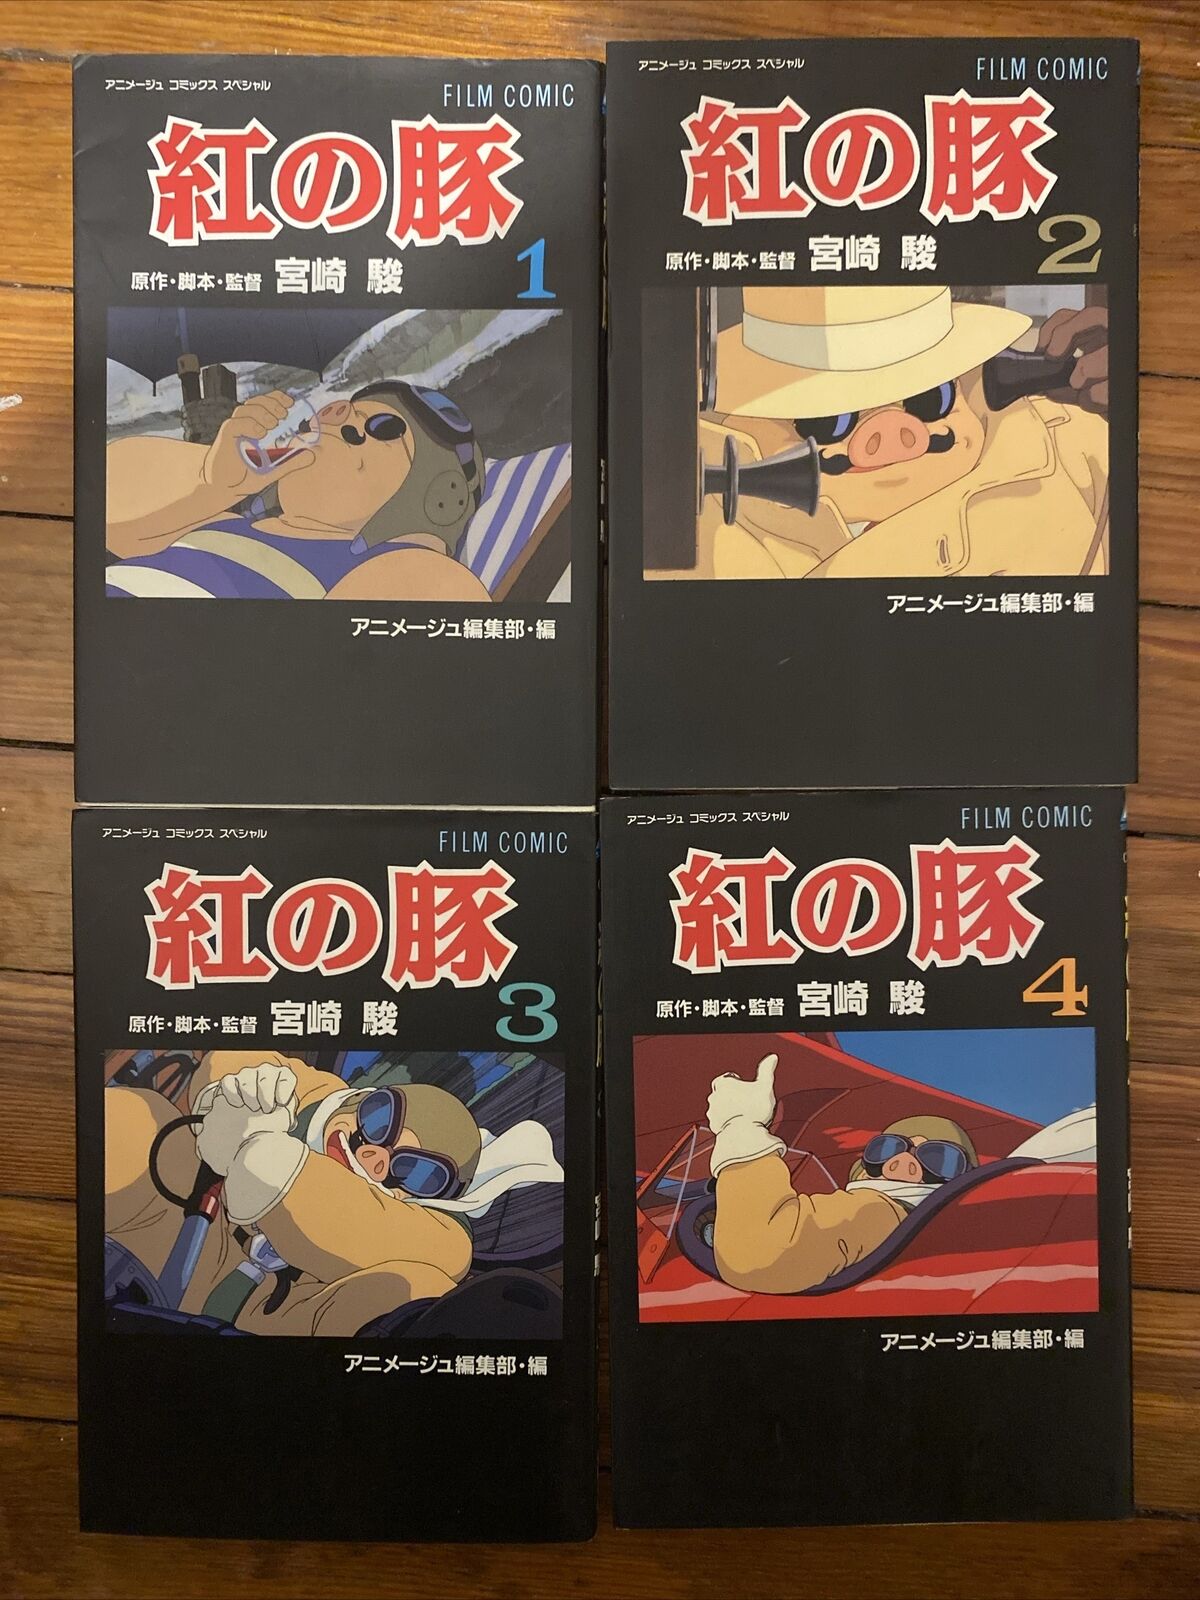 Porco Rosso Kurenai no Buta Japanese Film Comic 1~4 Complete Set Studio Ghibli